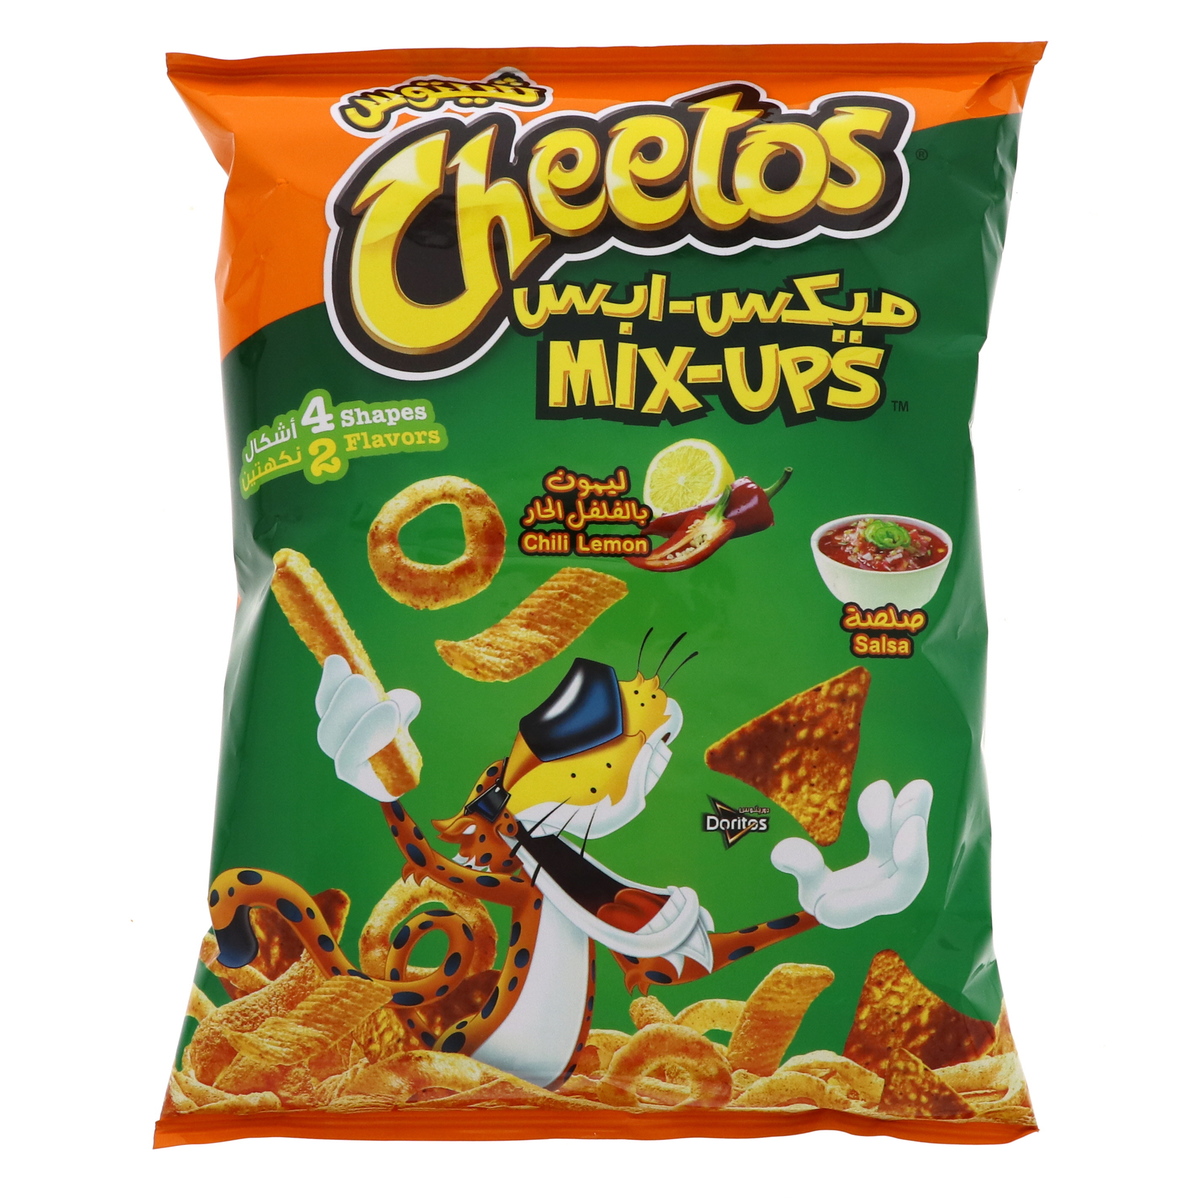 Cheetos Mix-Up Chili Lemon & Salsa 55g